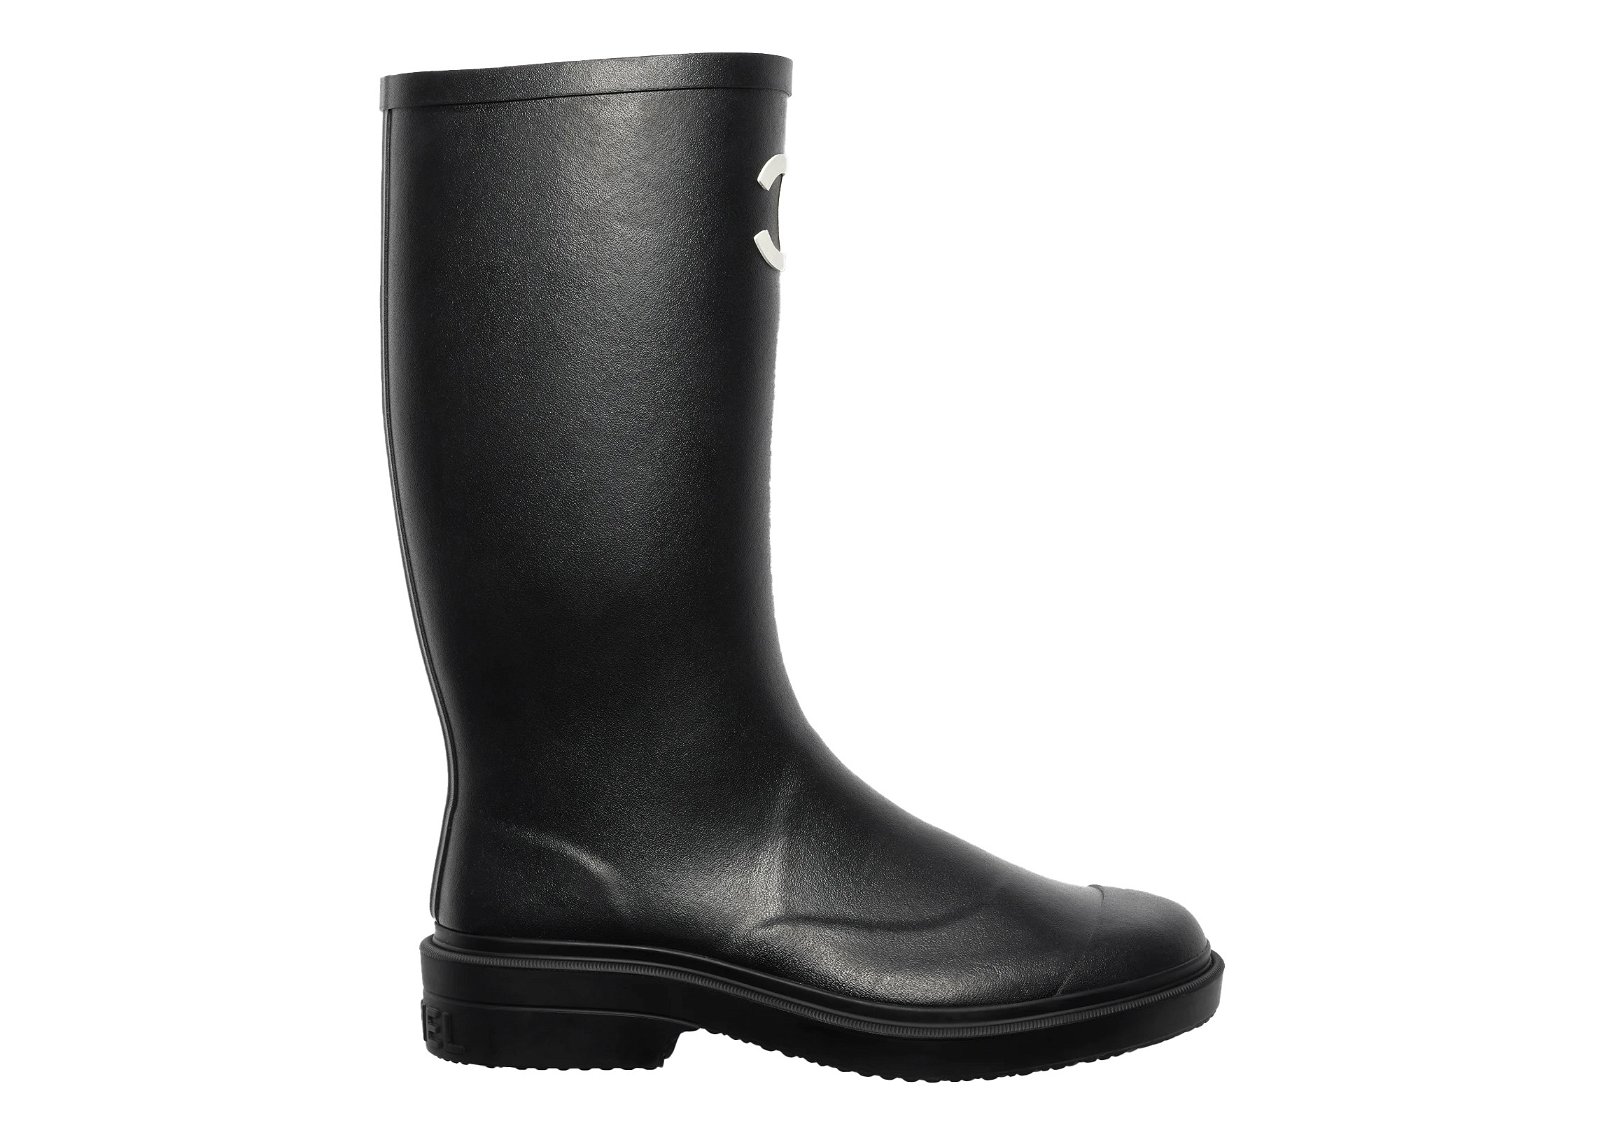 Chanel Rubber Rain Boots Black sneakers